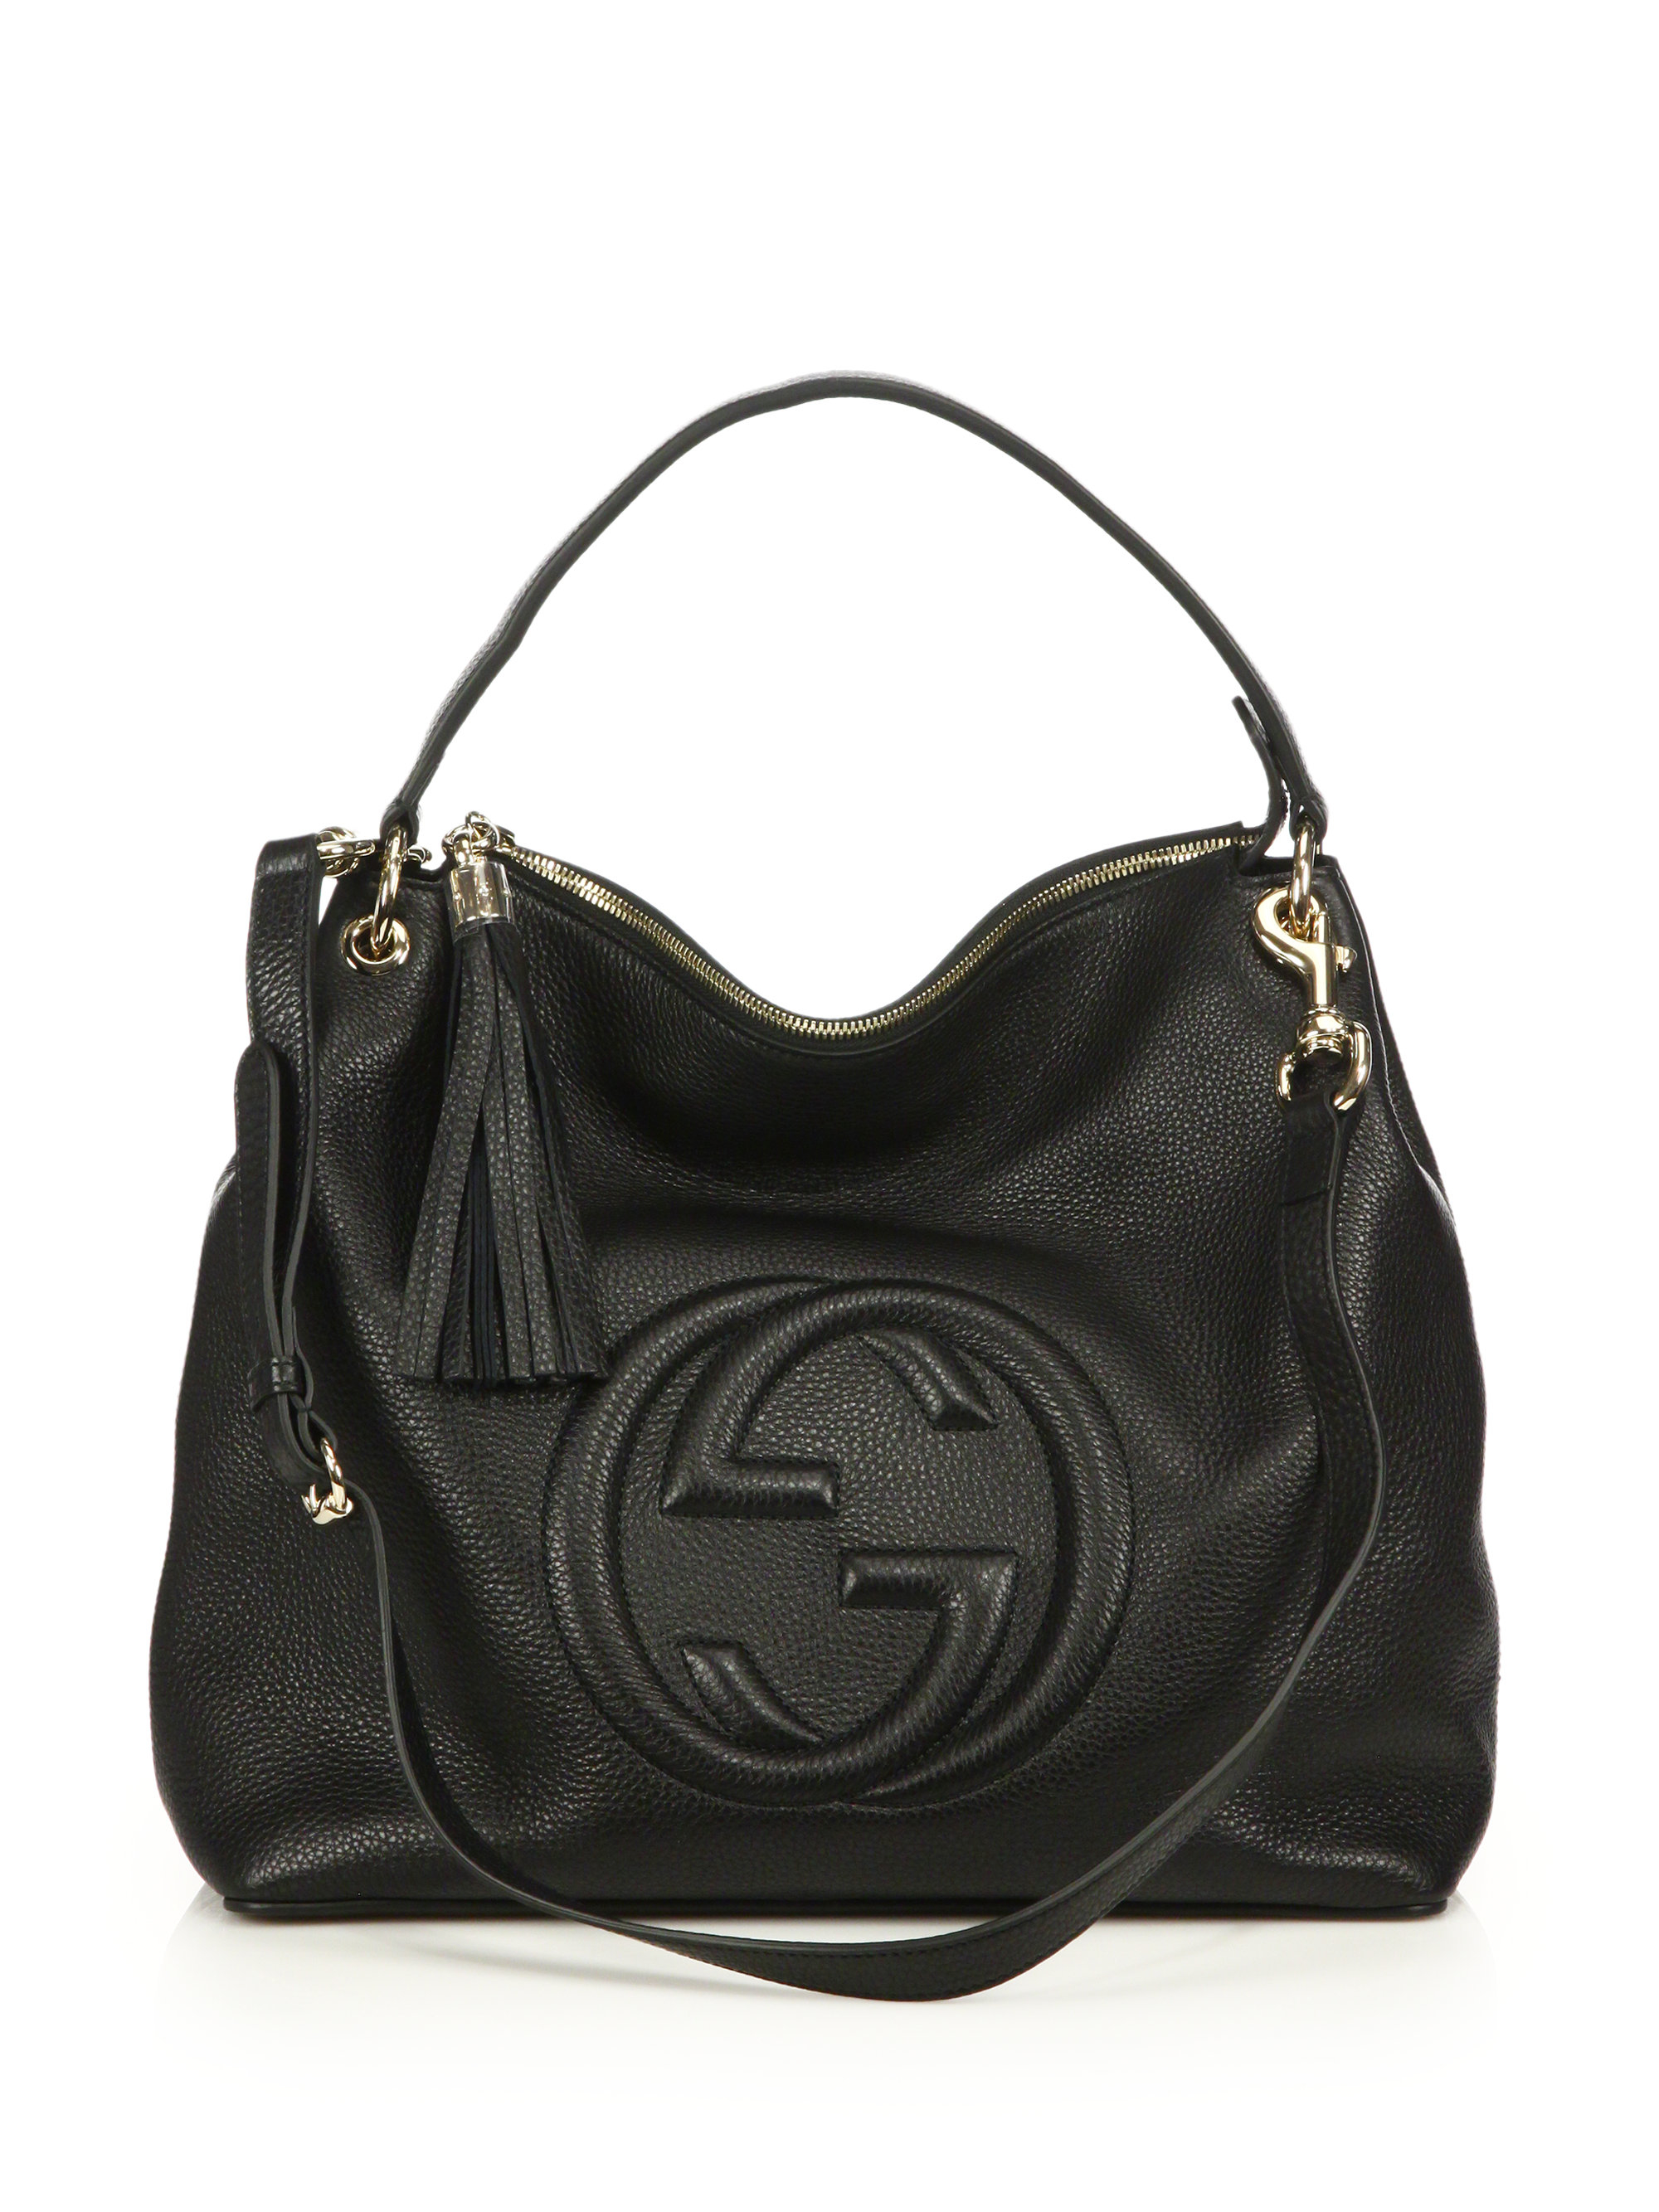 Gucci Soho Large Hobo Bag In Black Lyst